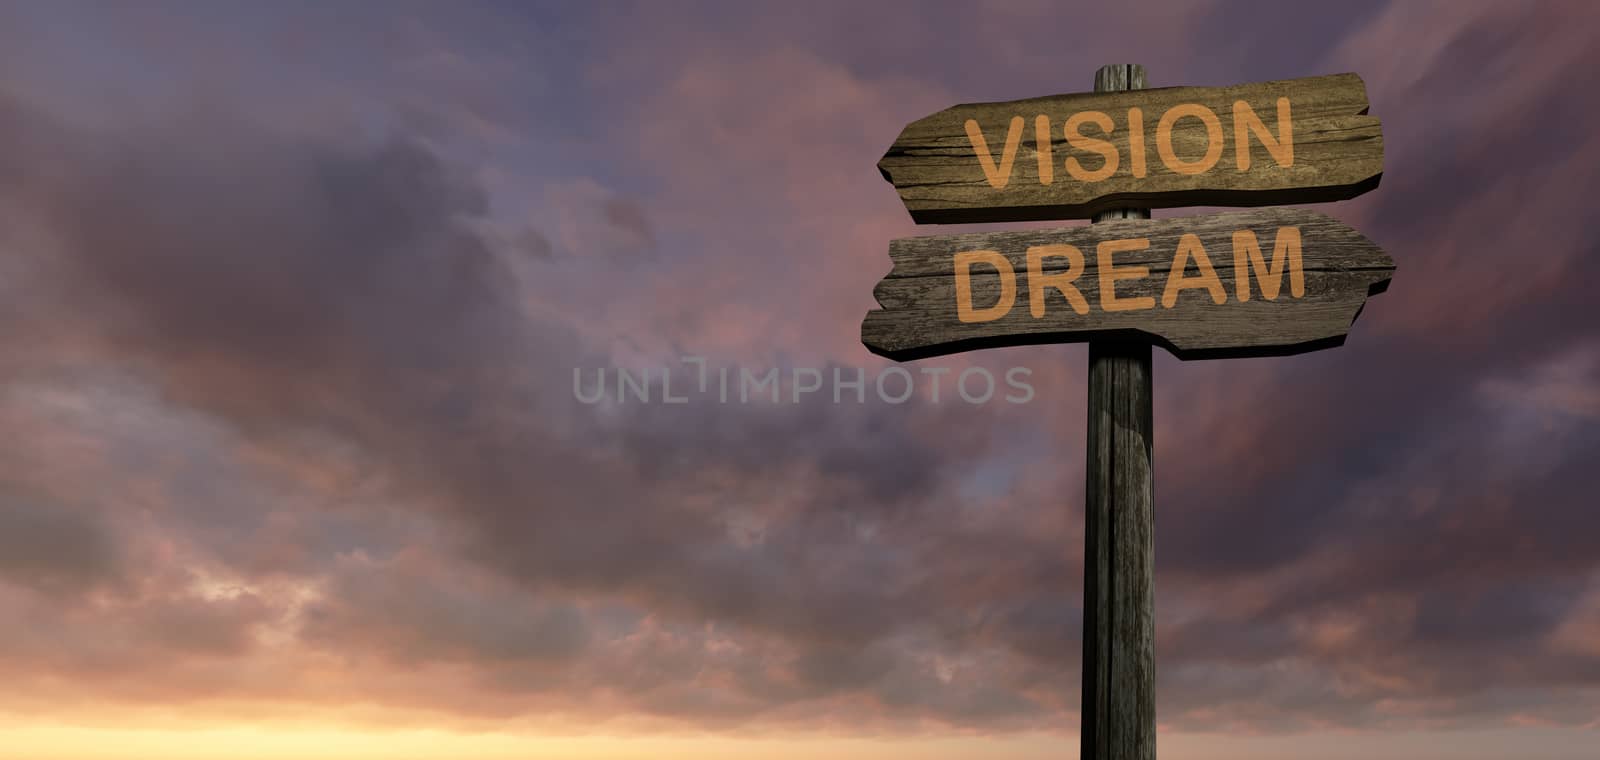 VISION - DREAM by vitanovski